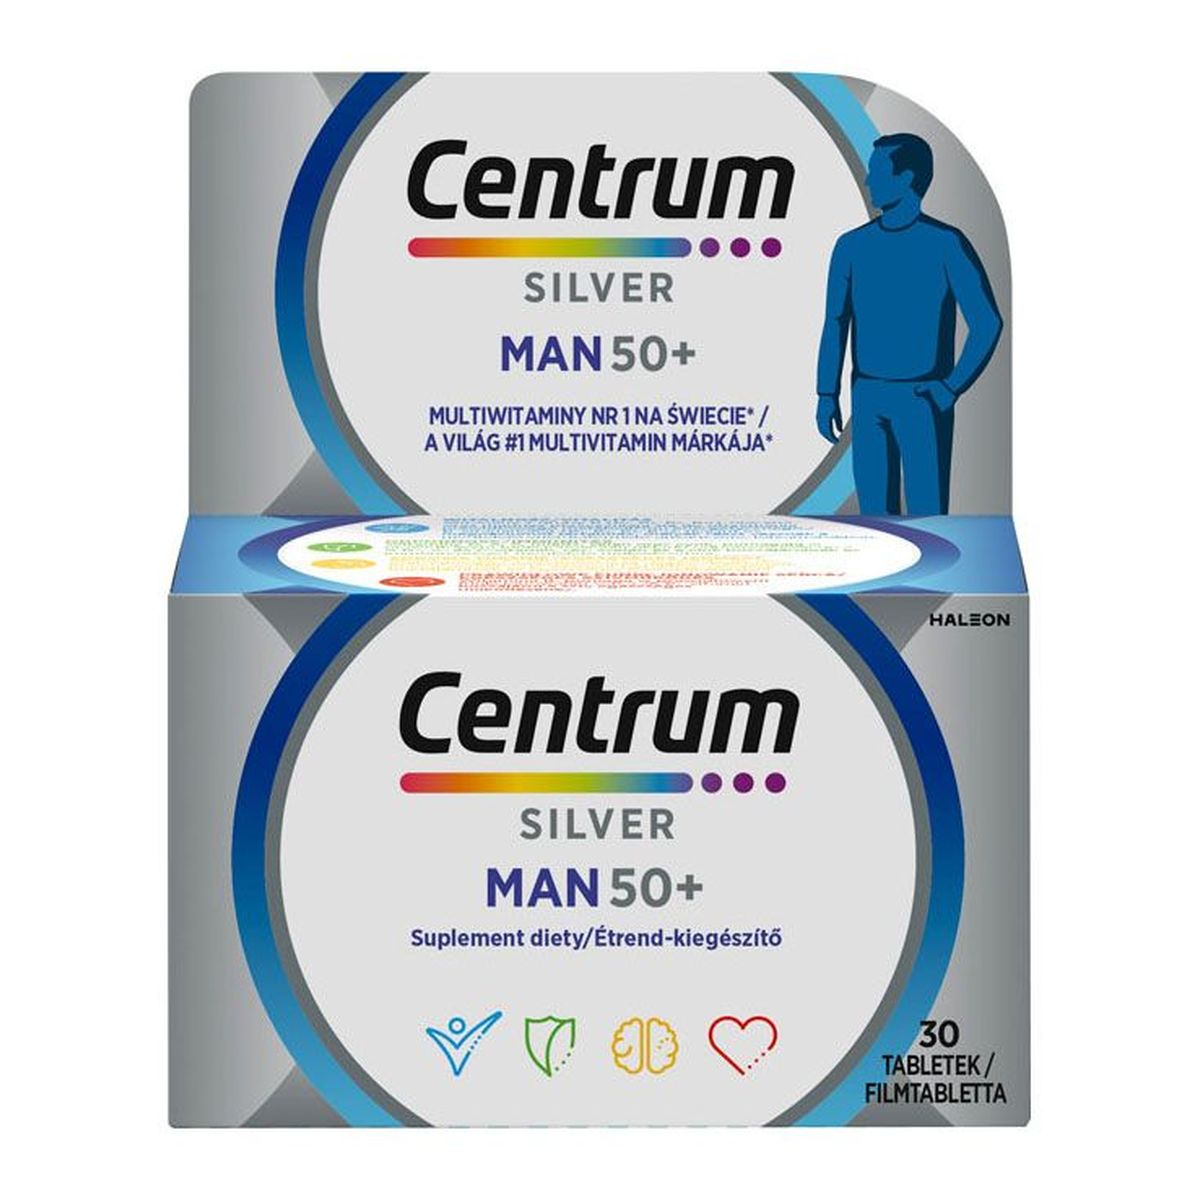 Centrum Silver man 50+ multiwitaminy dla mężczyzn suplement diety 30 tabletek